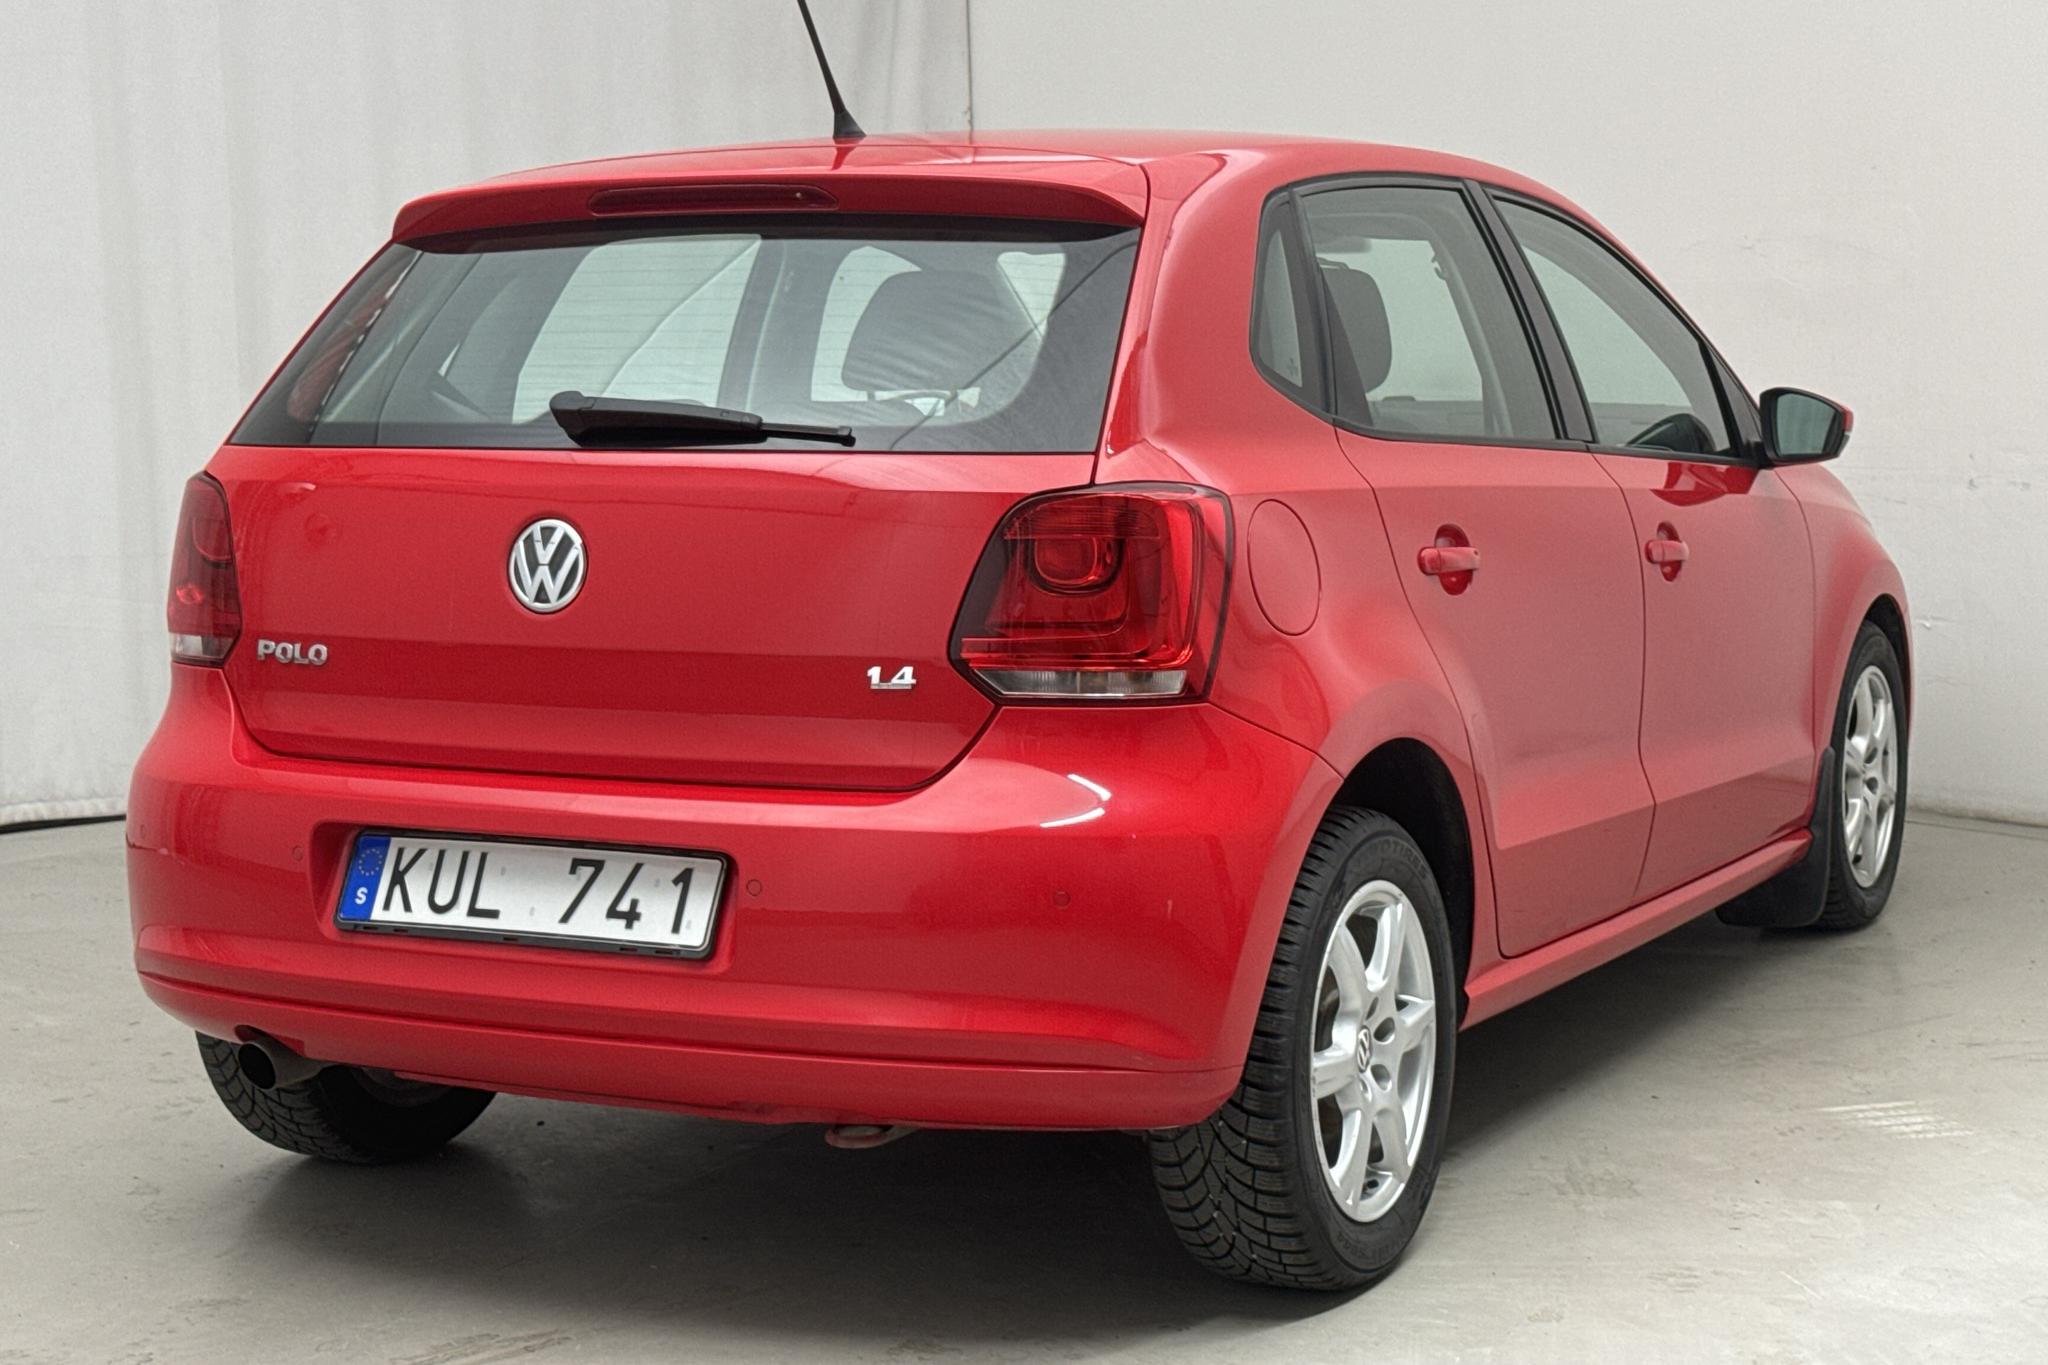 VW Polo 1.4 5dr (85hk) - 94 590 km - Manual - red - 2011